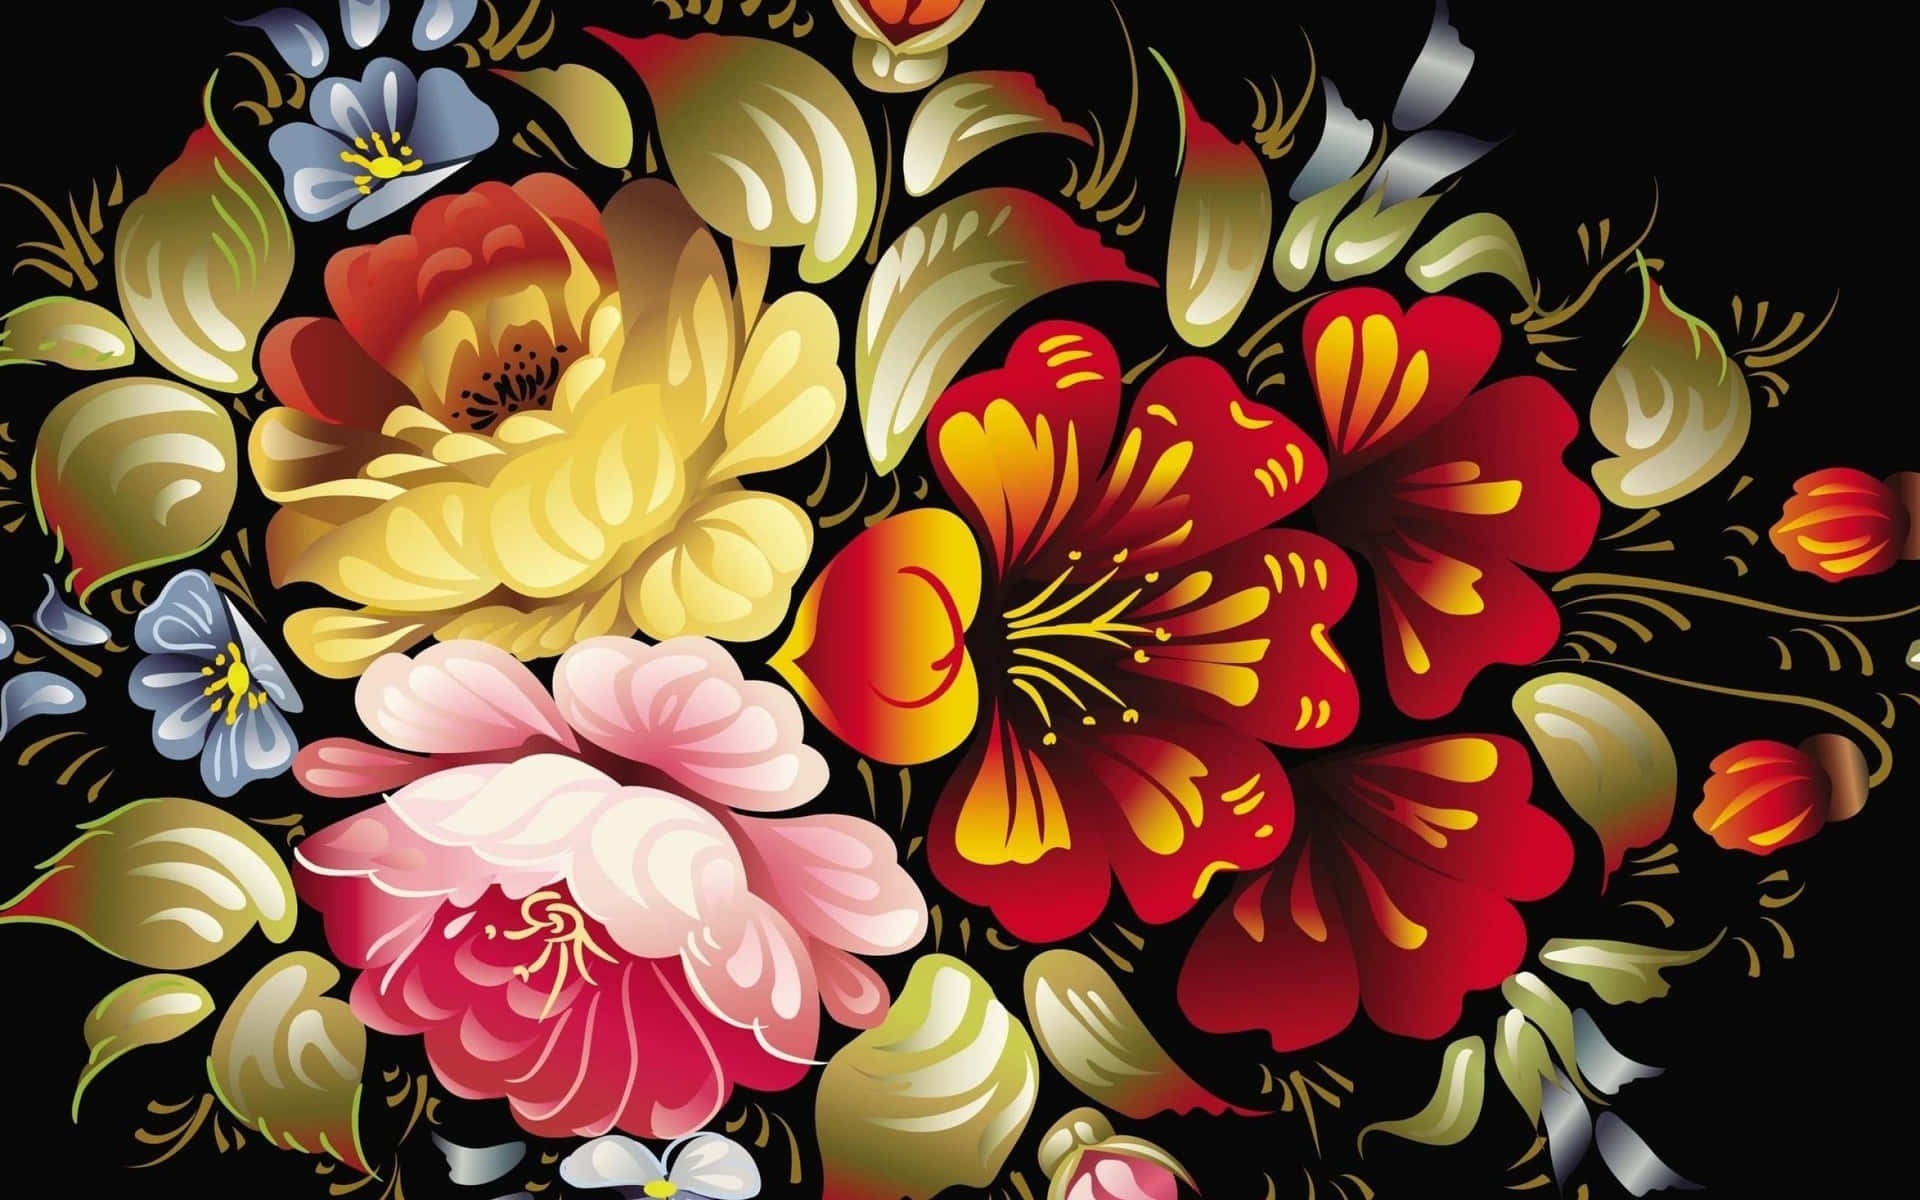 Enchanting Flower Art Display in Vibrant Colors Wallpaper